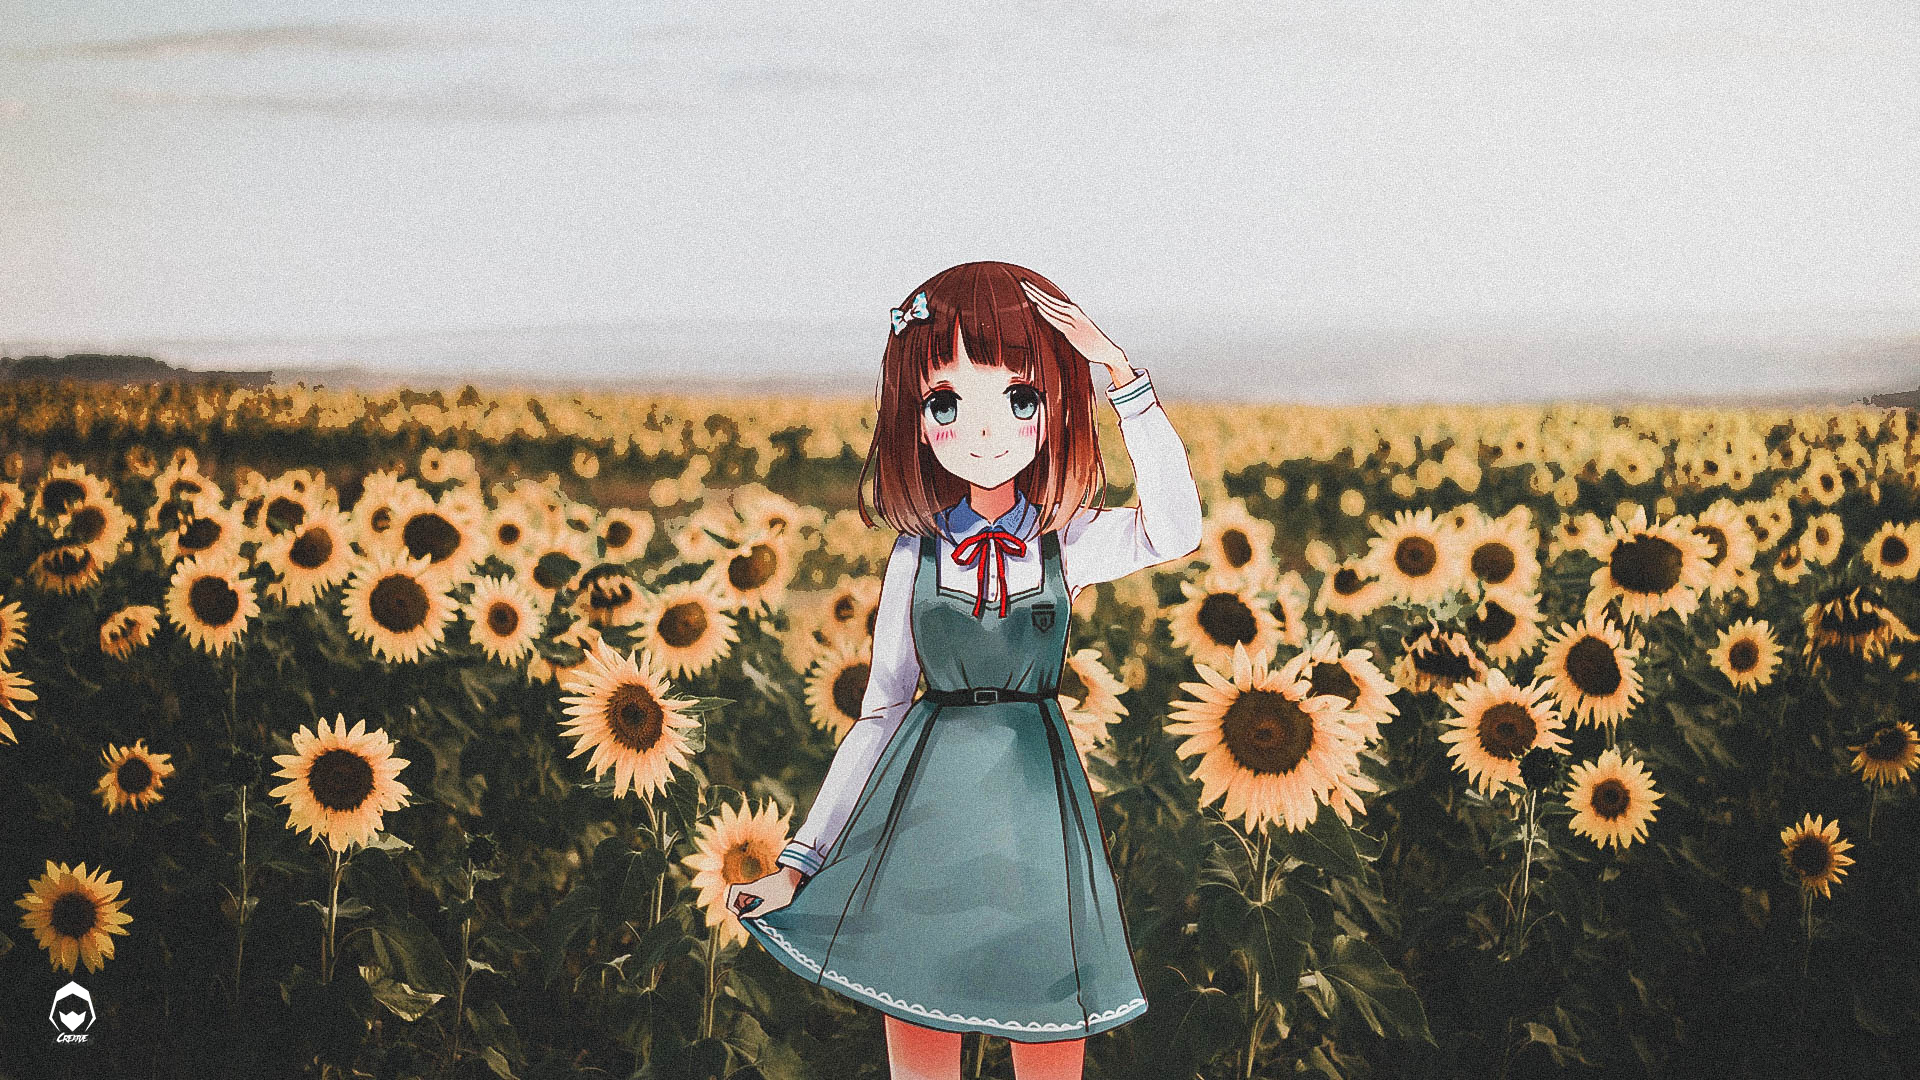 Anime&Art - #sunflowers #image #fanart #anime #drawing... | Facebook